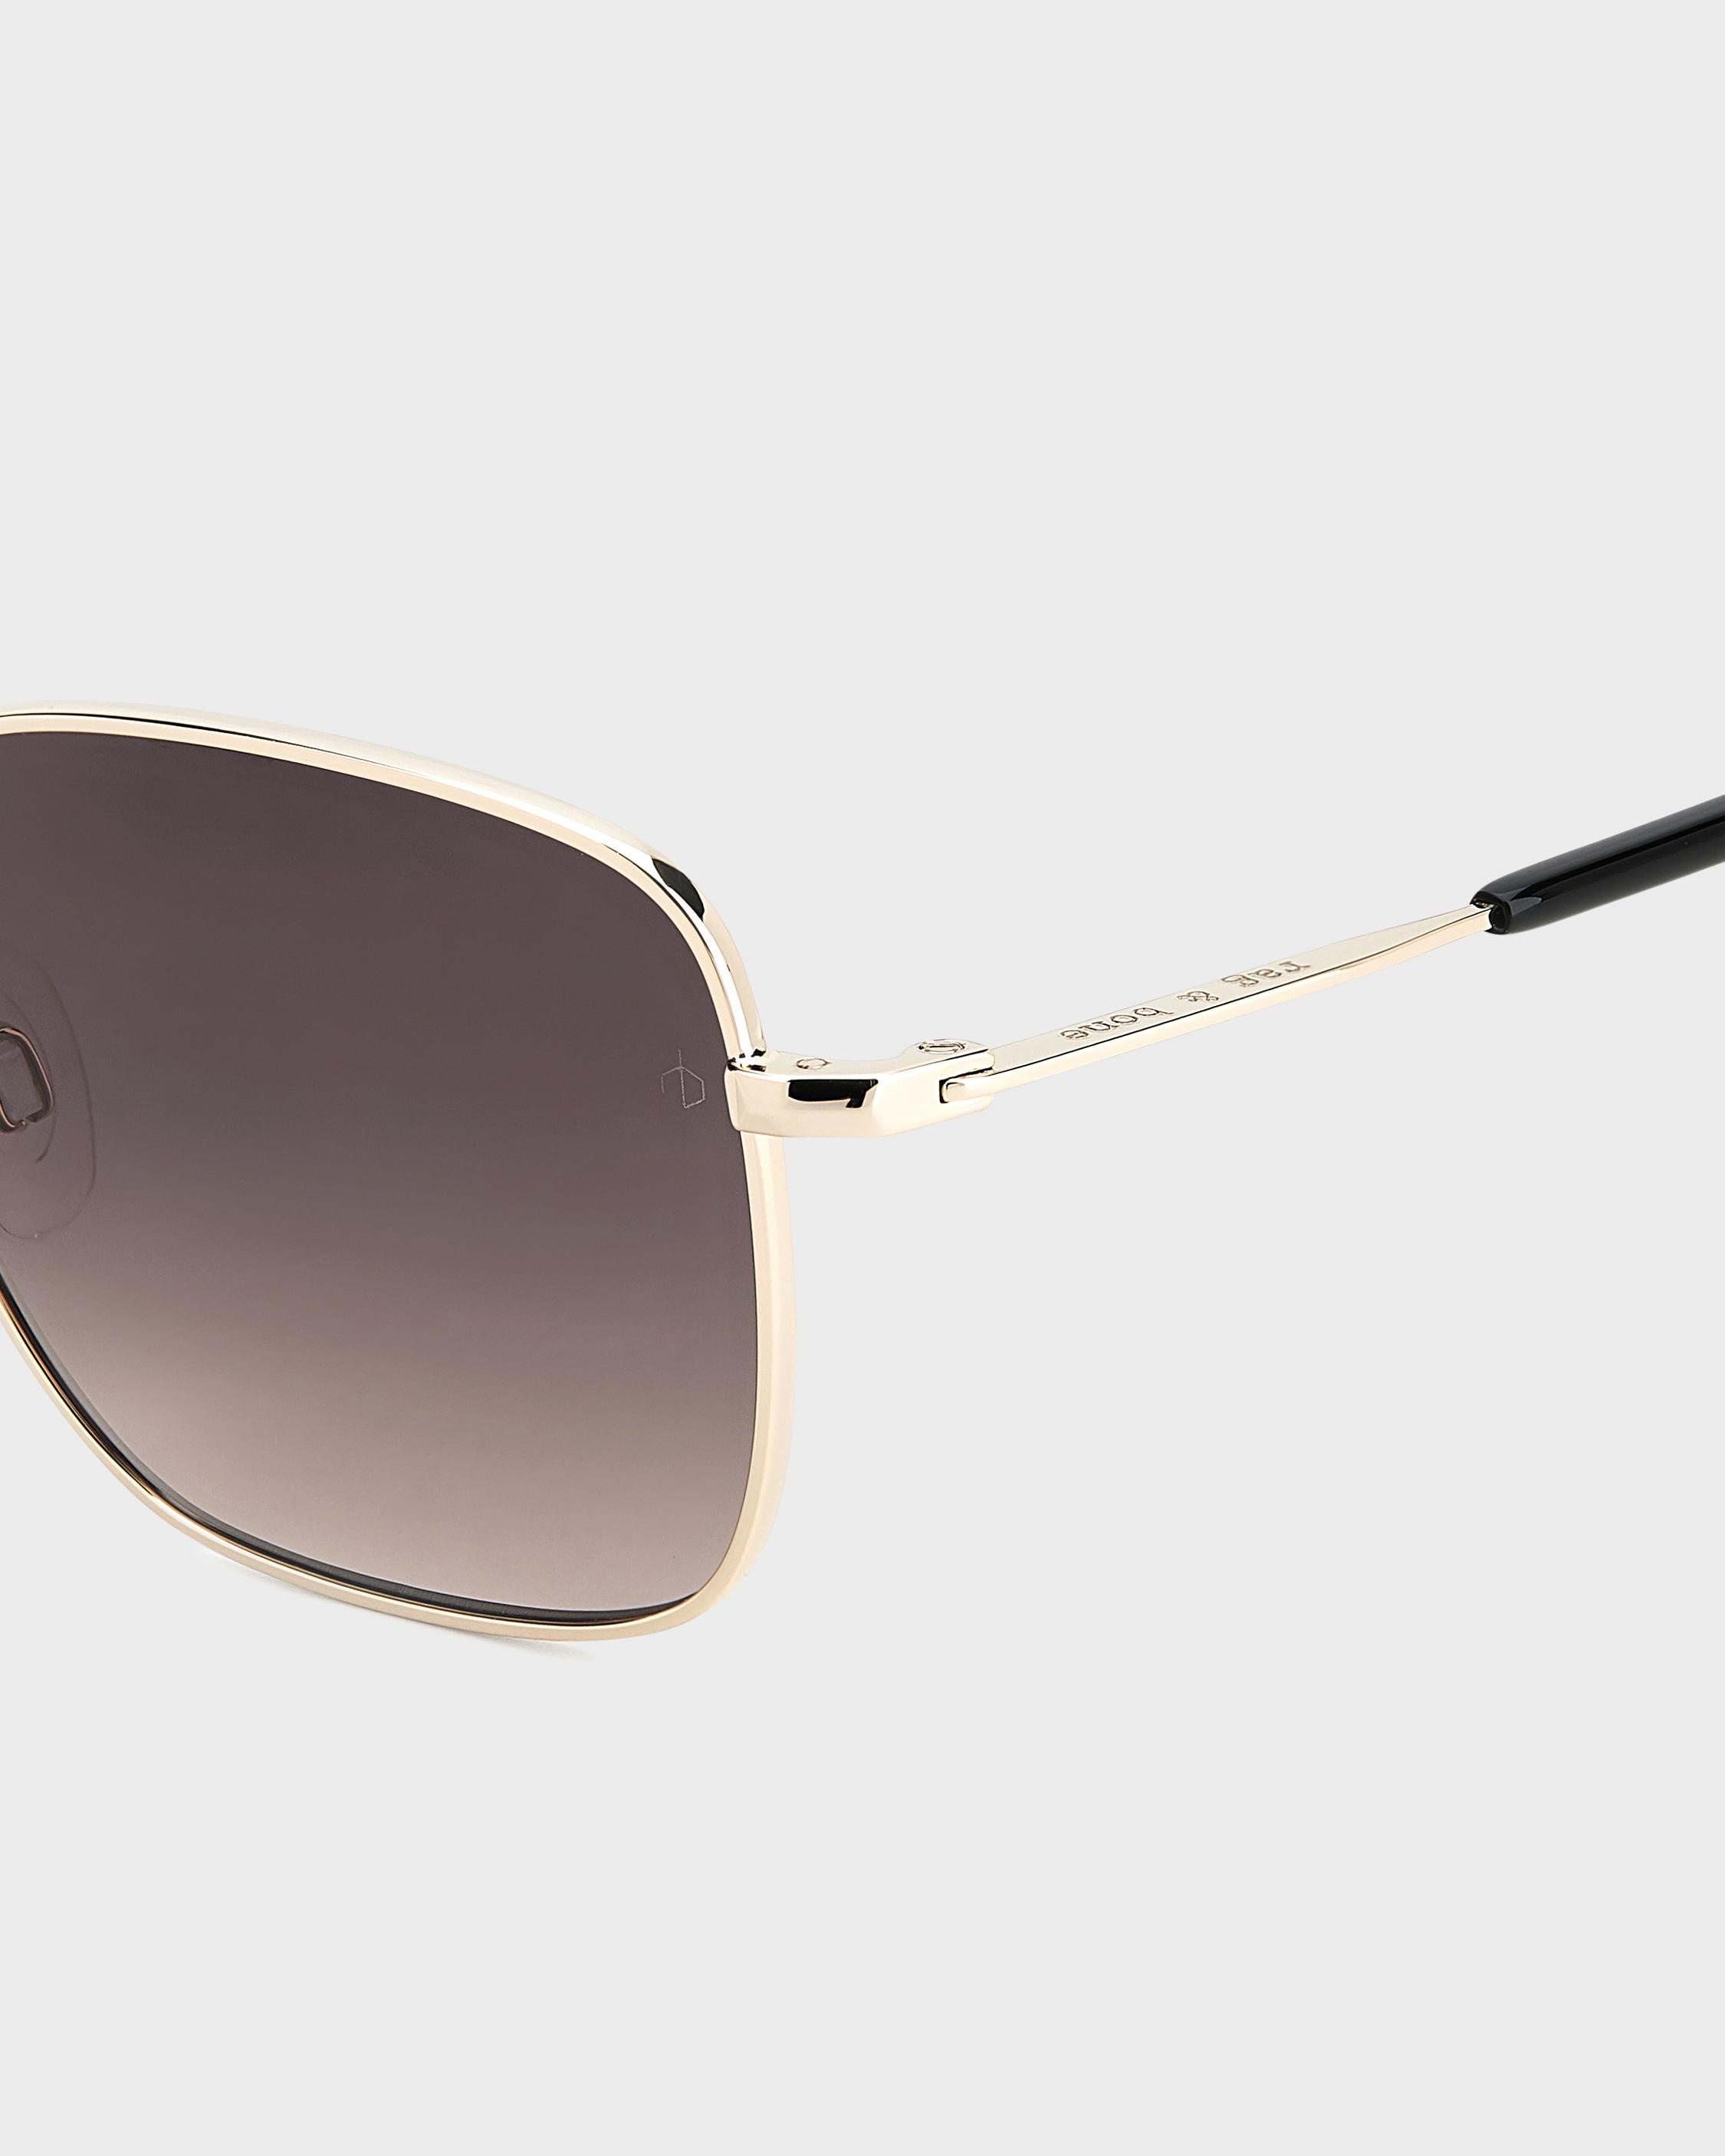 Breton
Square Sunglasses - 3